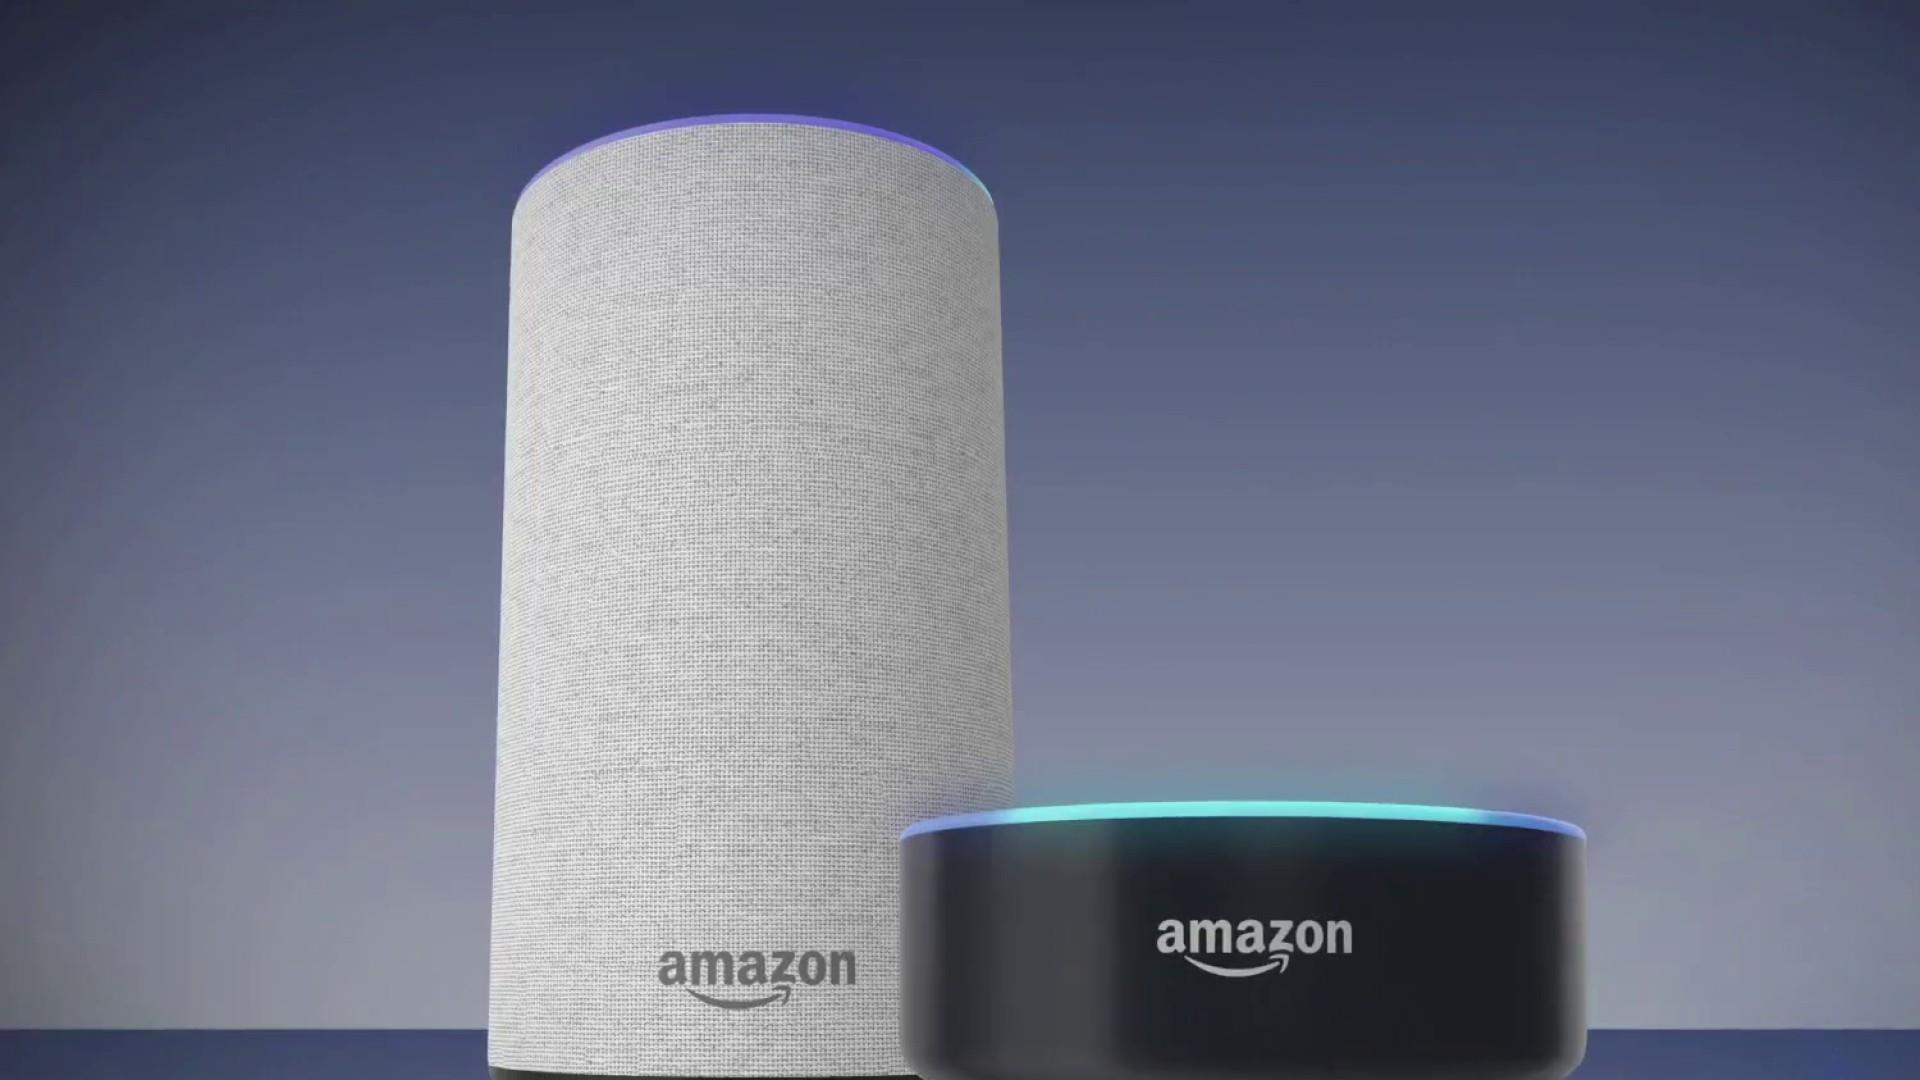 Thousands of Amazon employees listen to Alexa